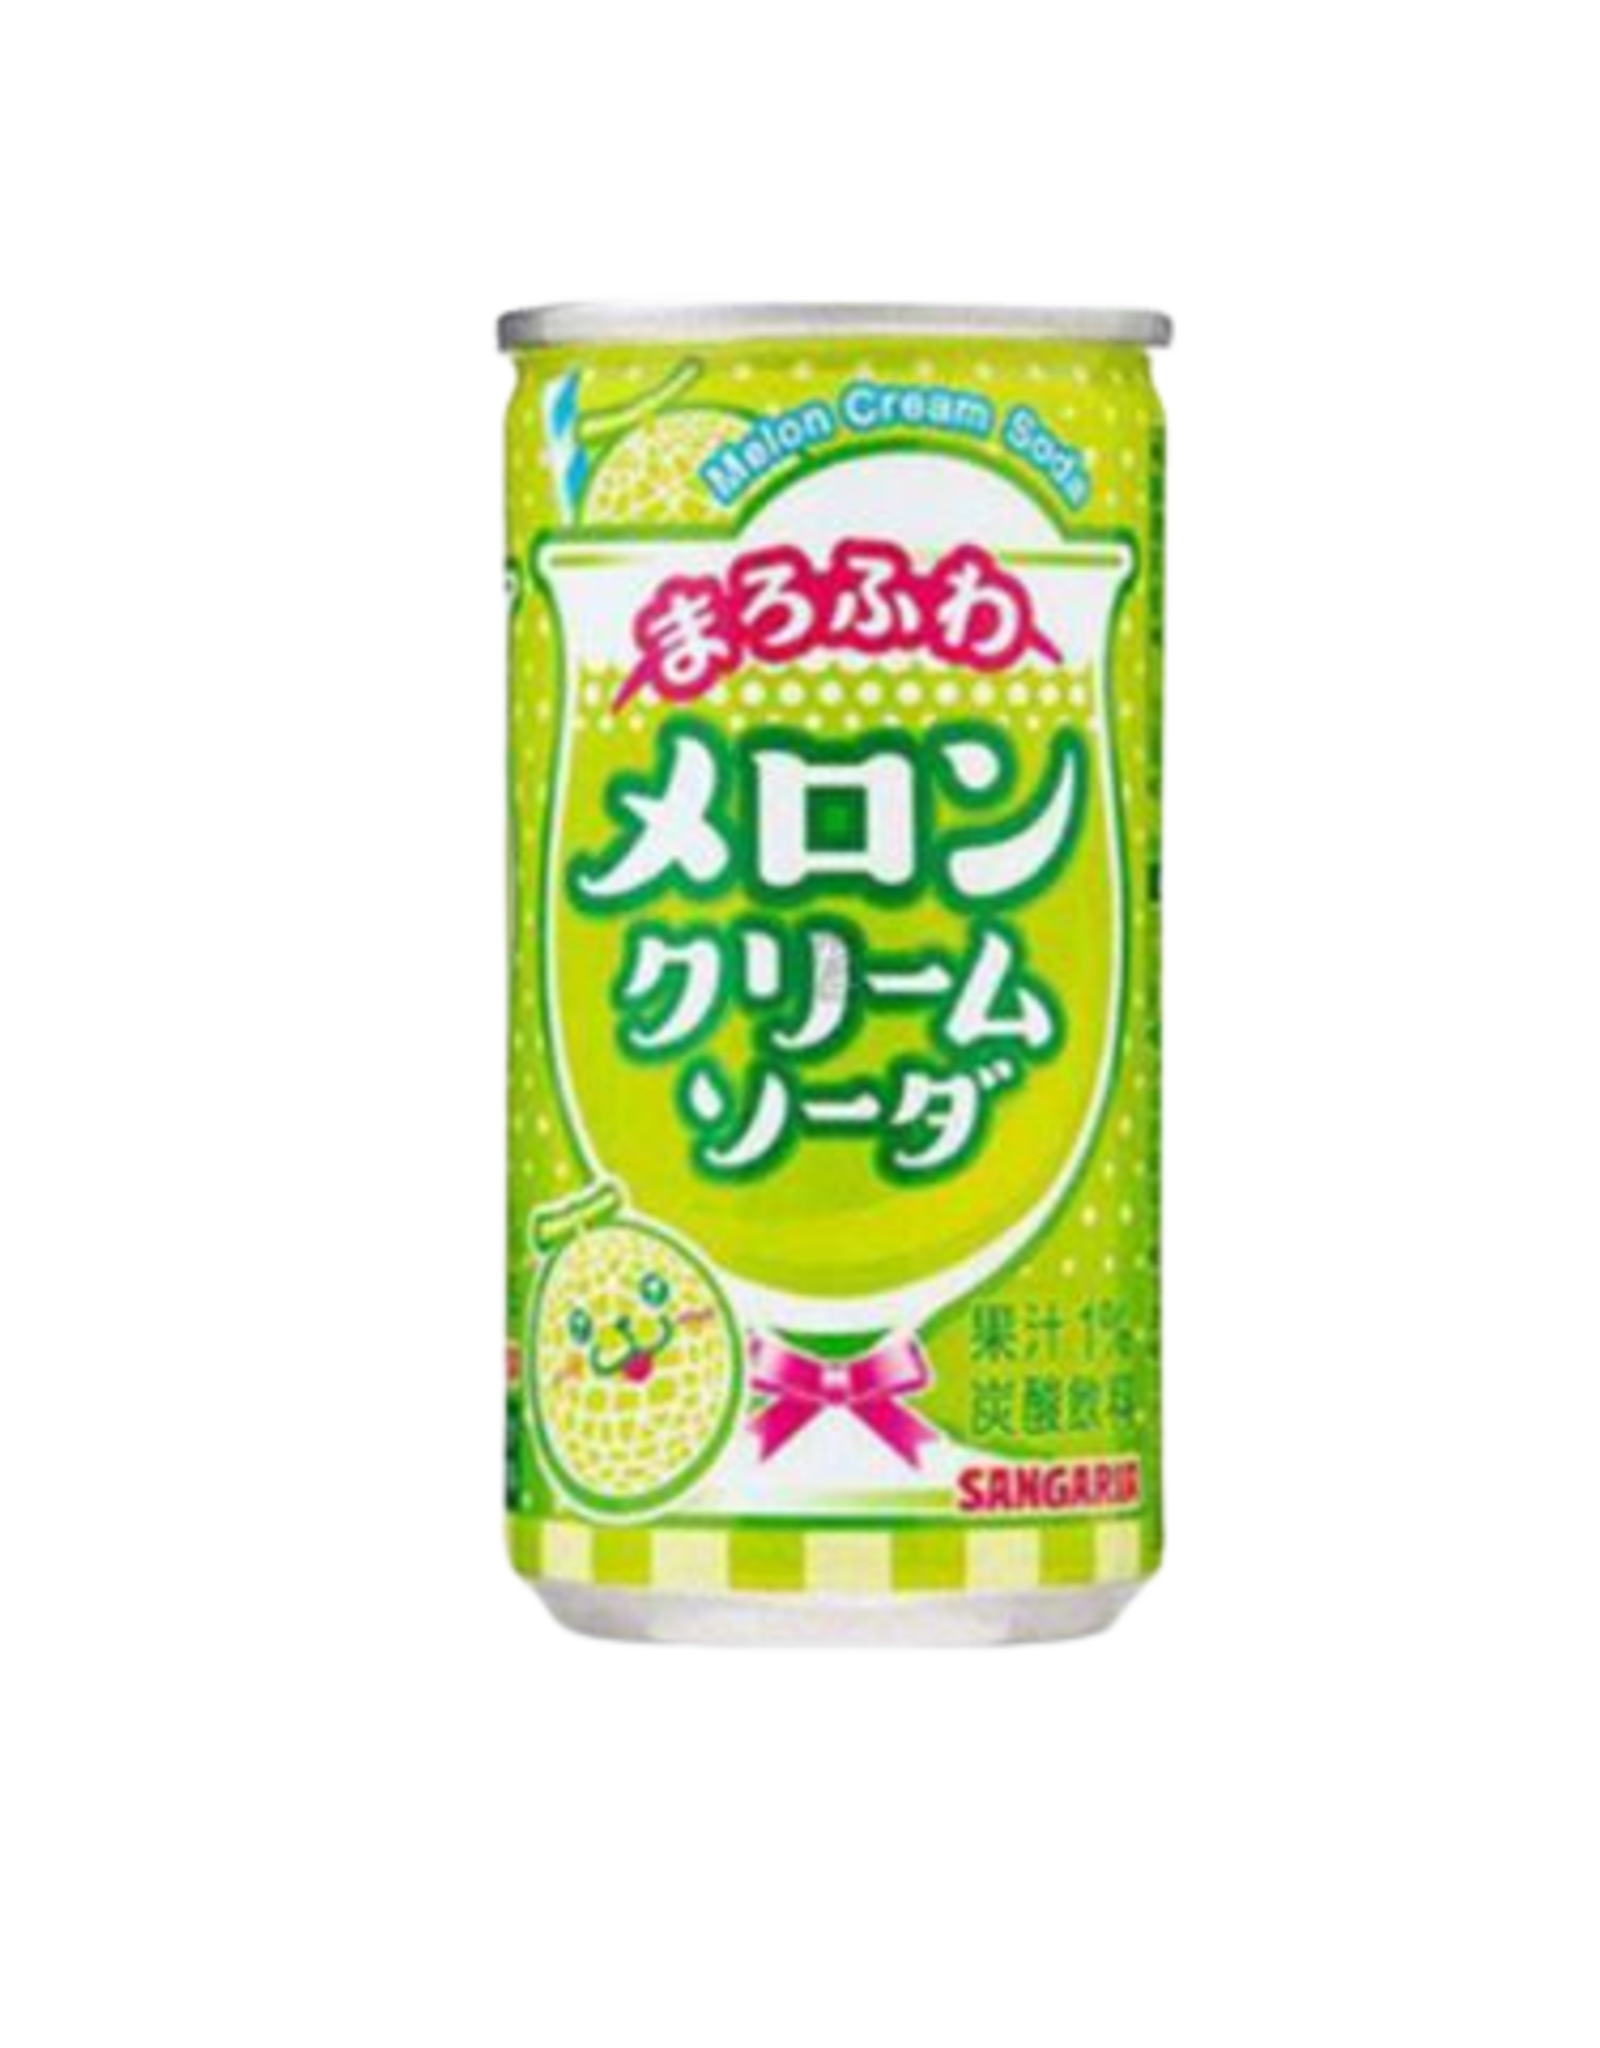 Sangaria Marofuwa Melon Cream – Japan Can